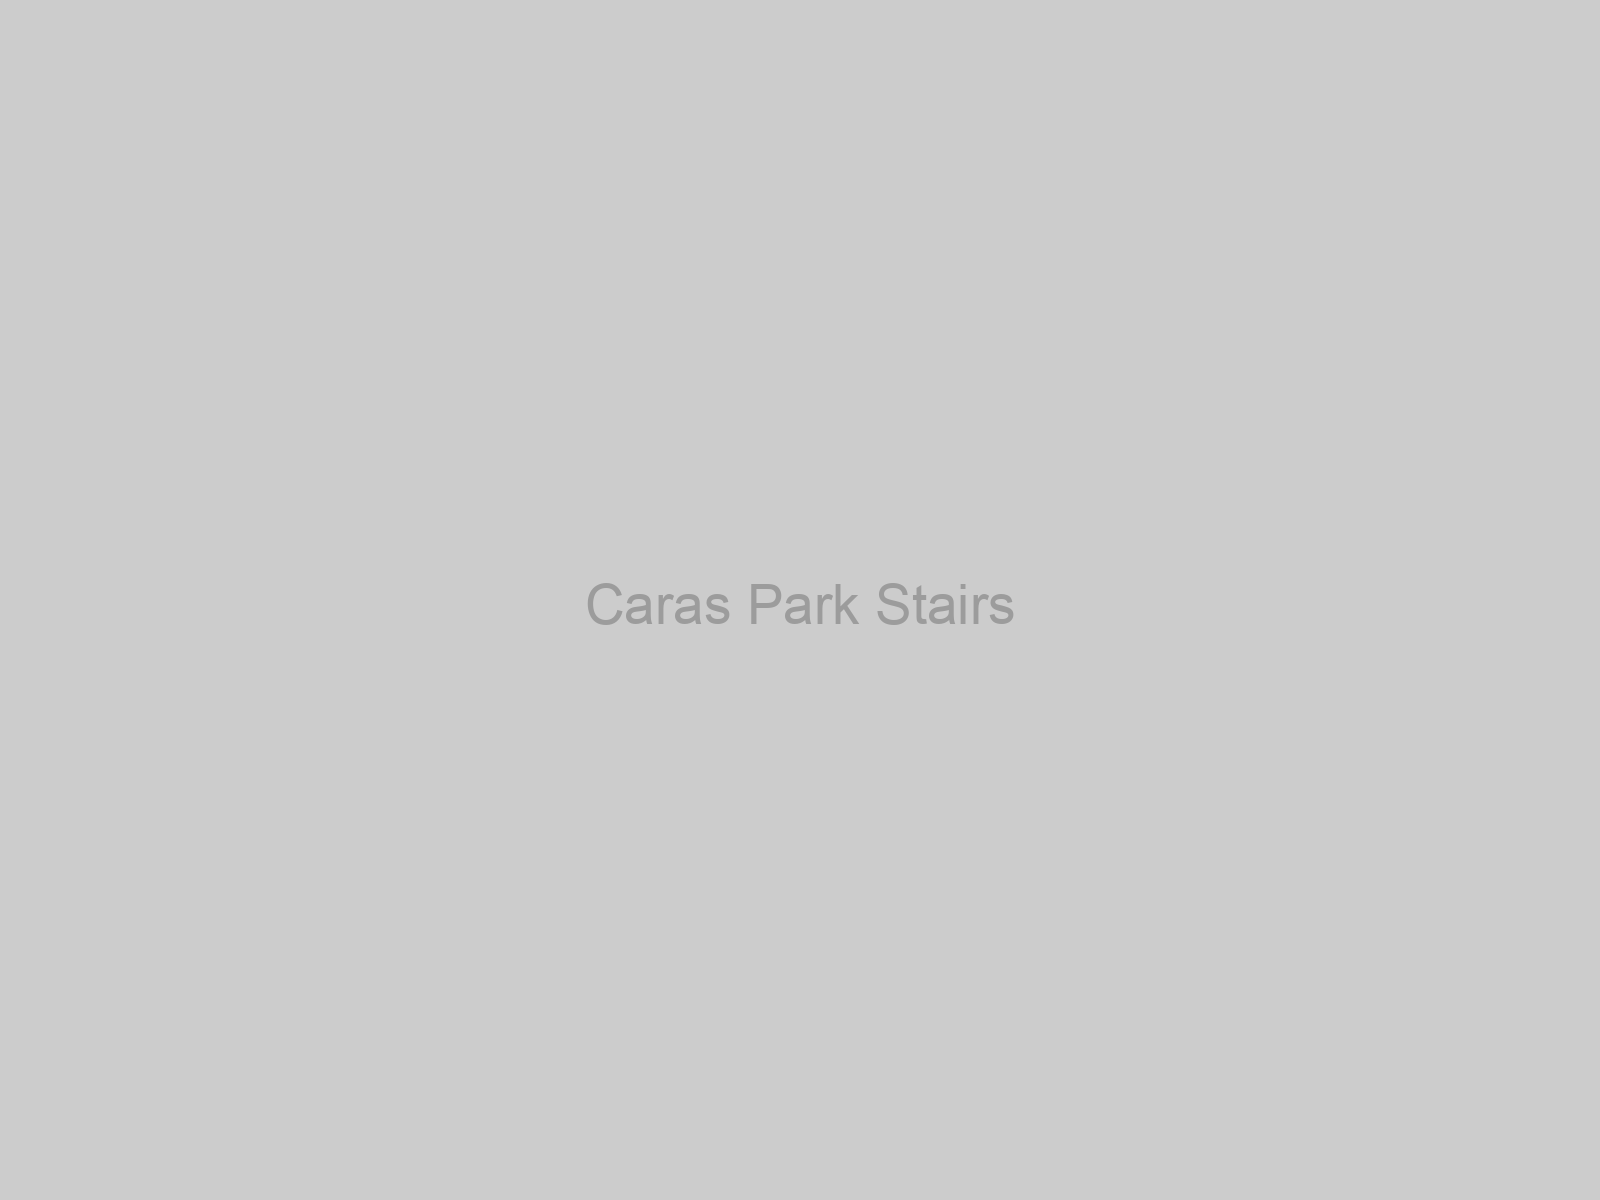 Caras Park Stairs